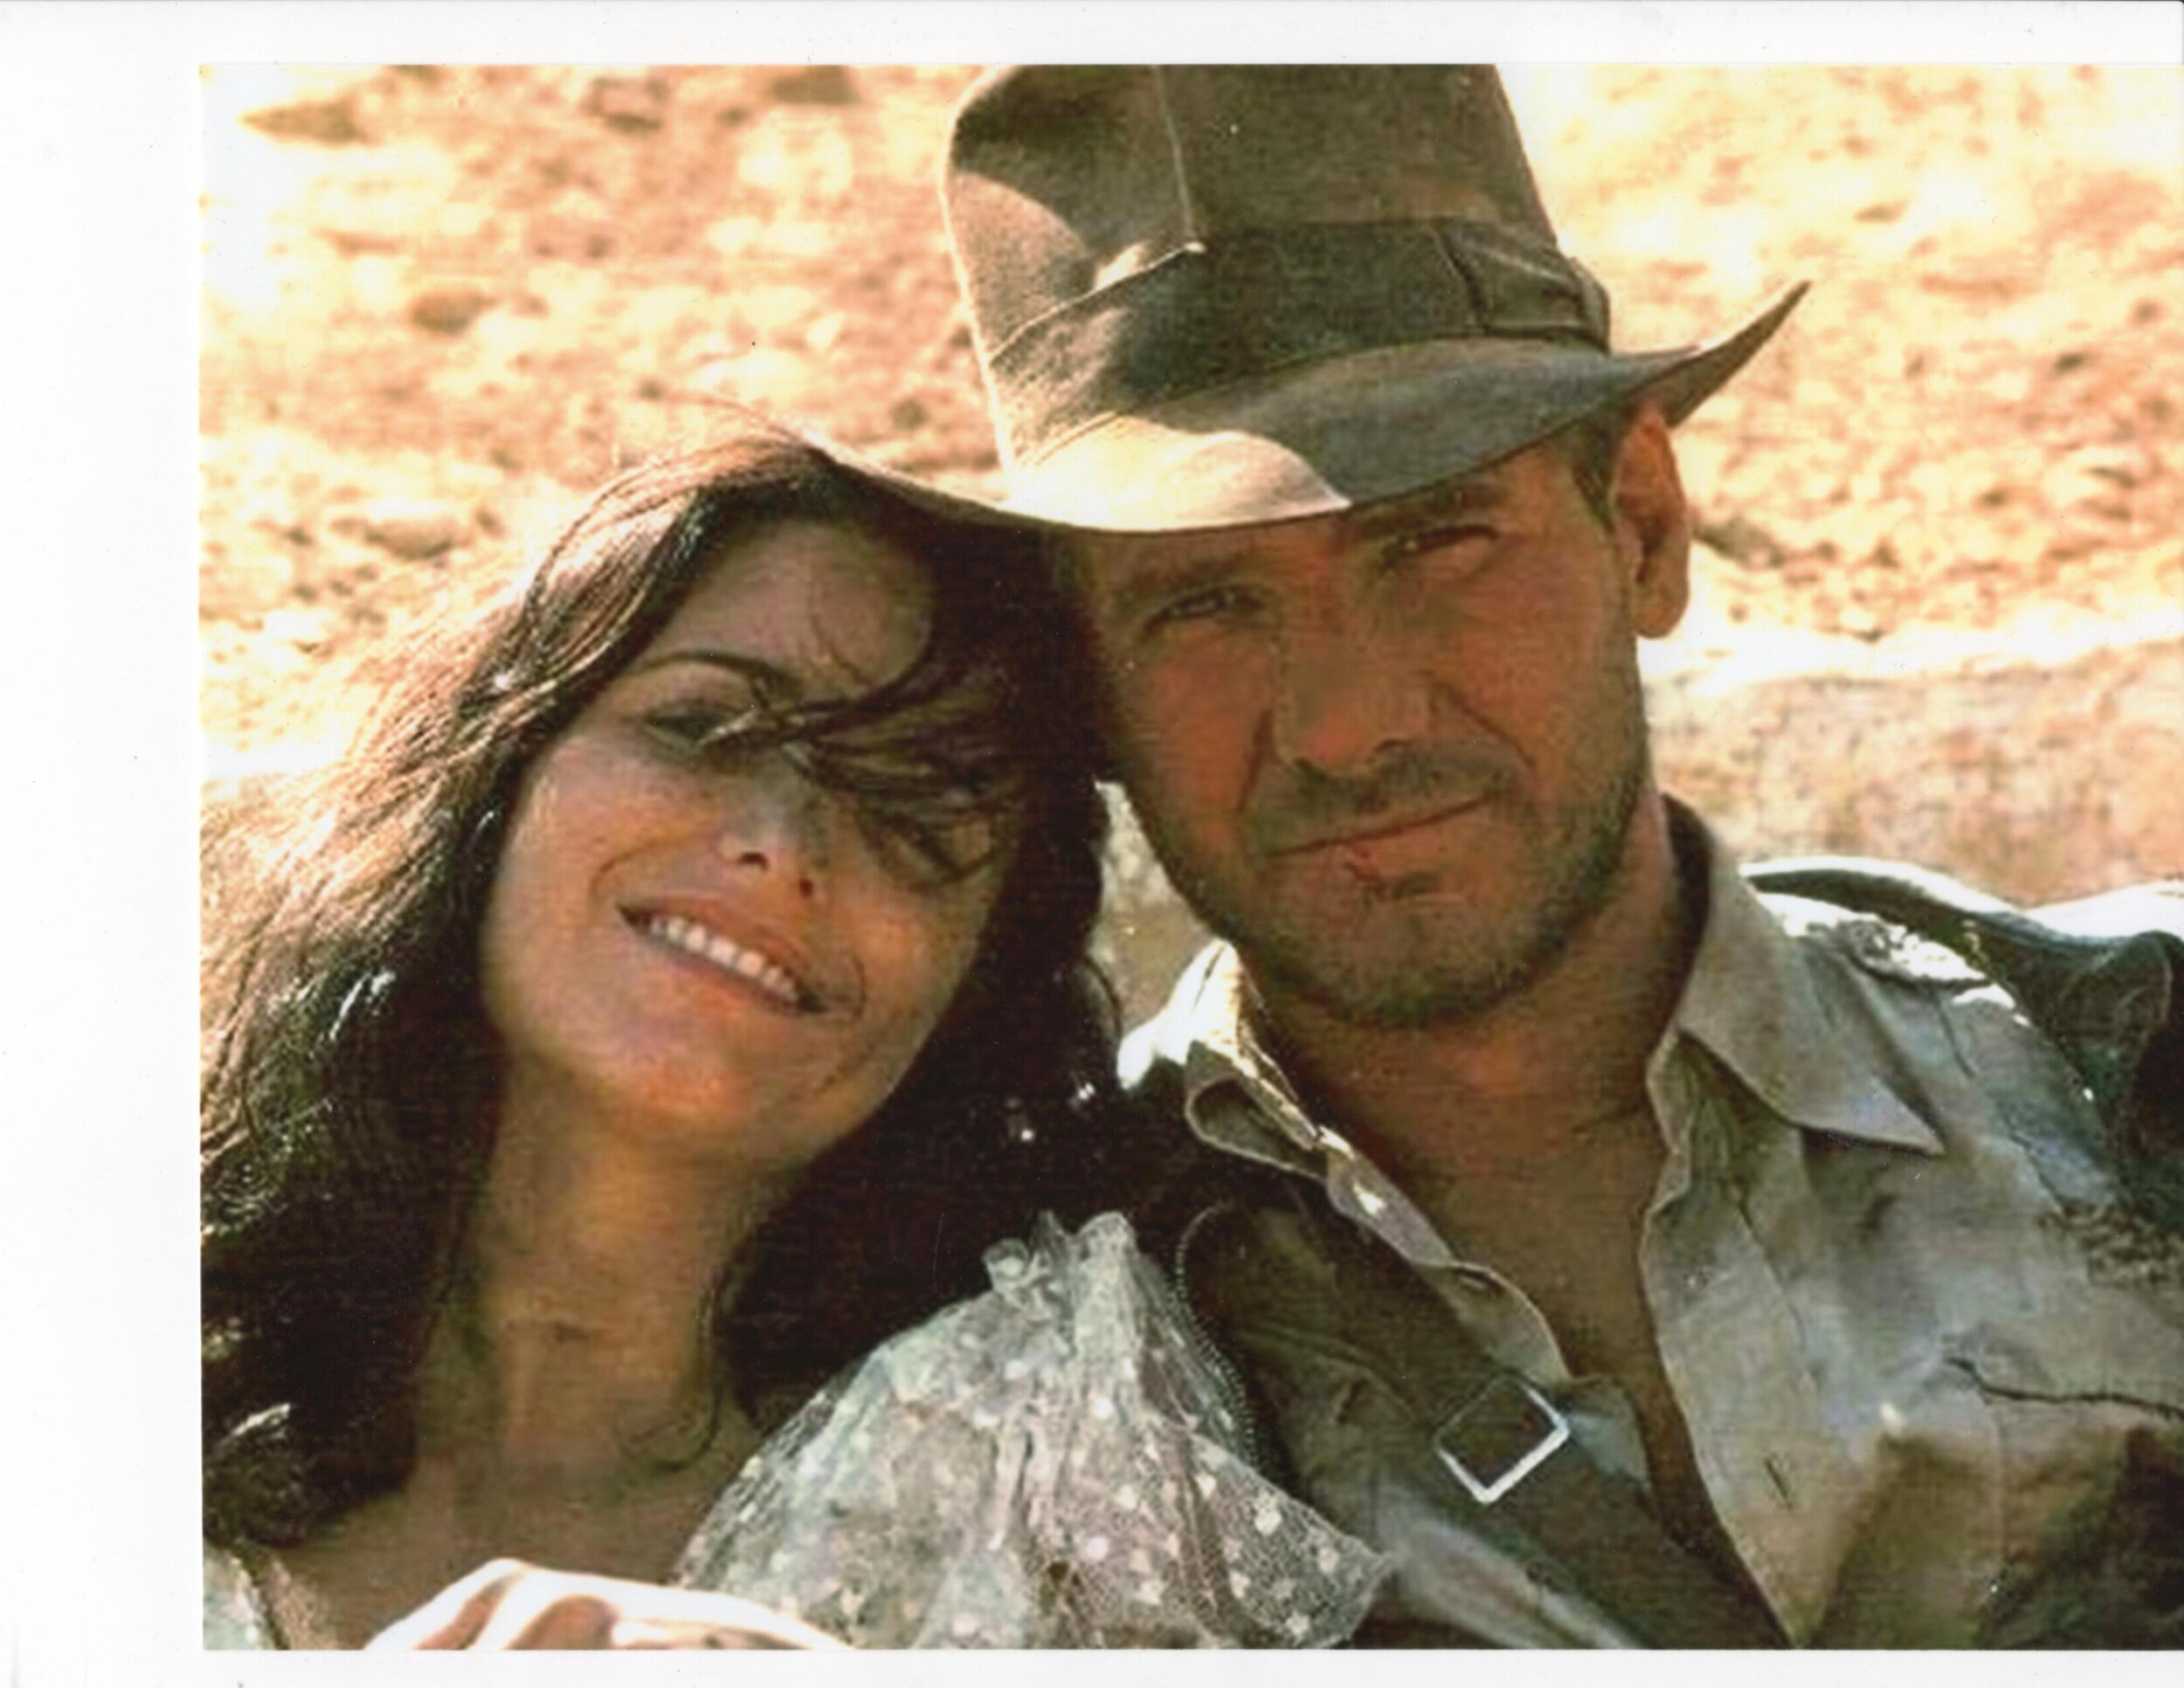 Indiana Jones' star Karen Allen disappointed about role in movie